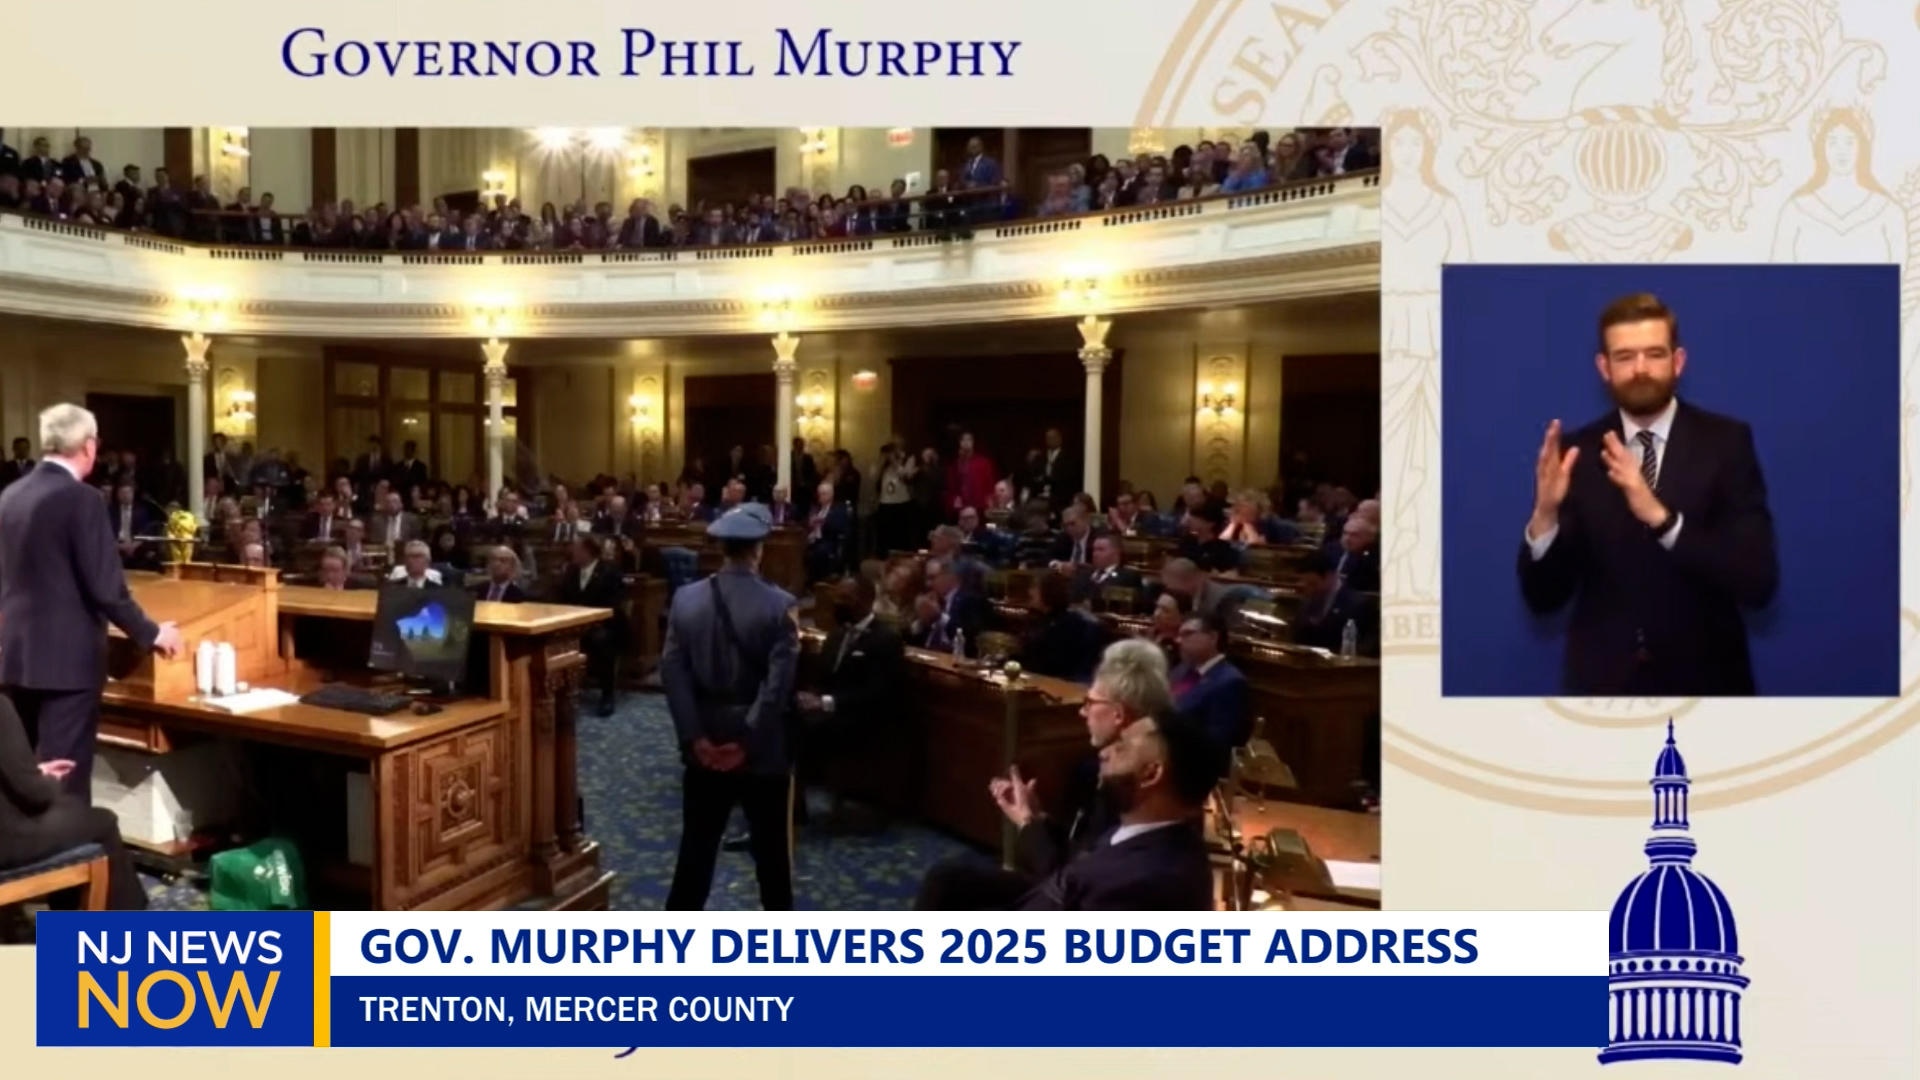 NJ News Now – NJ Budget Address for 2025